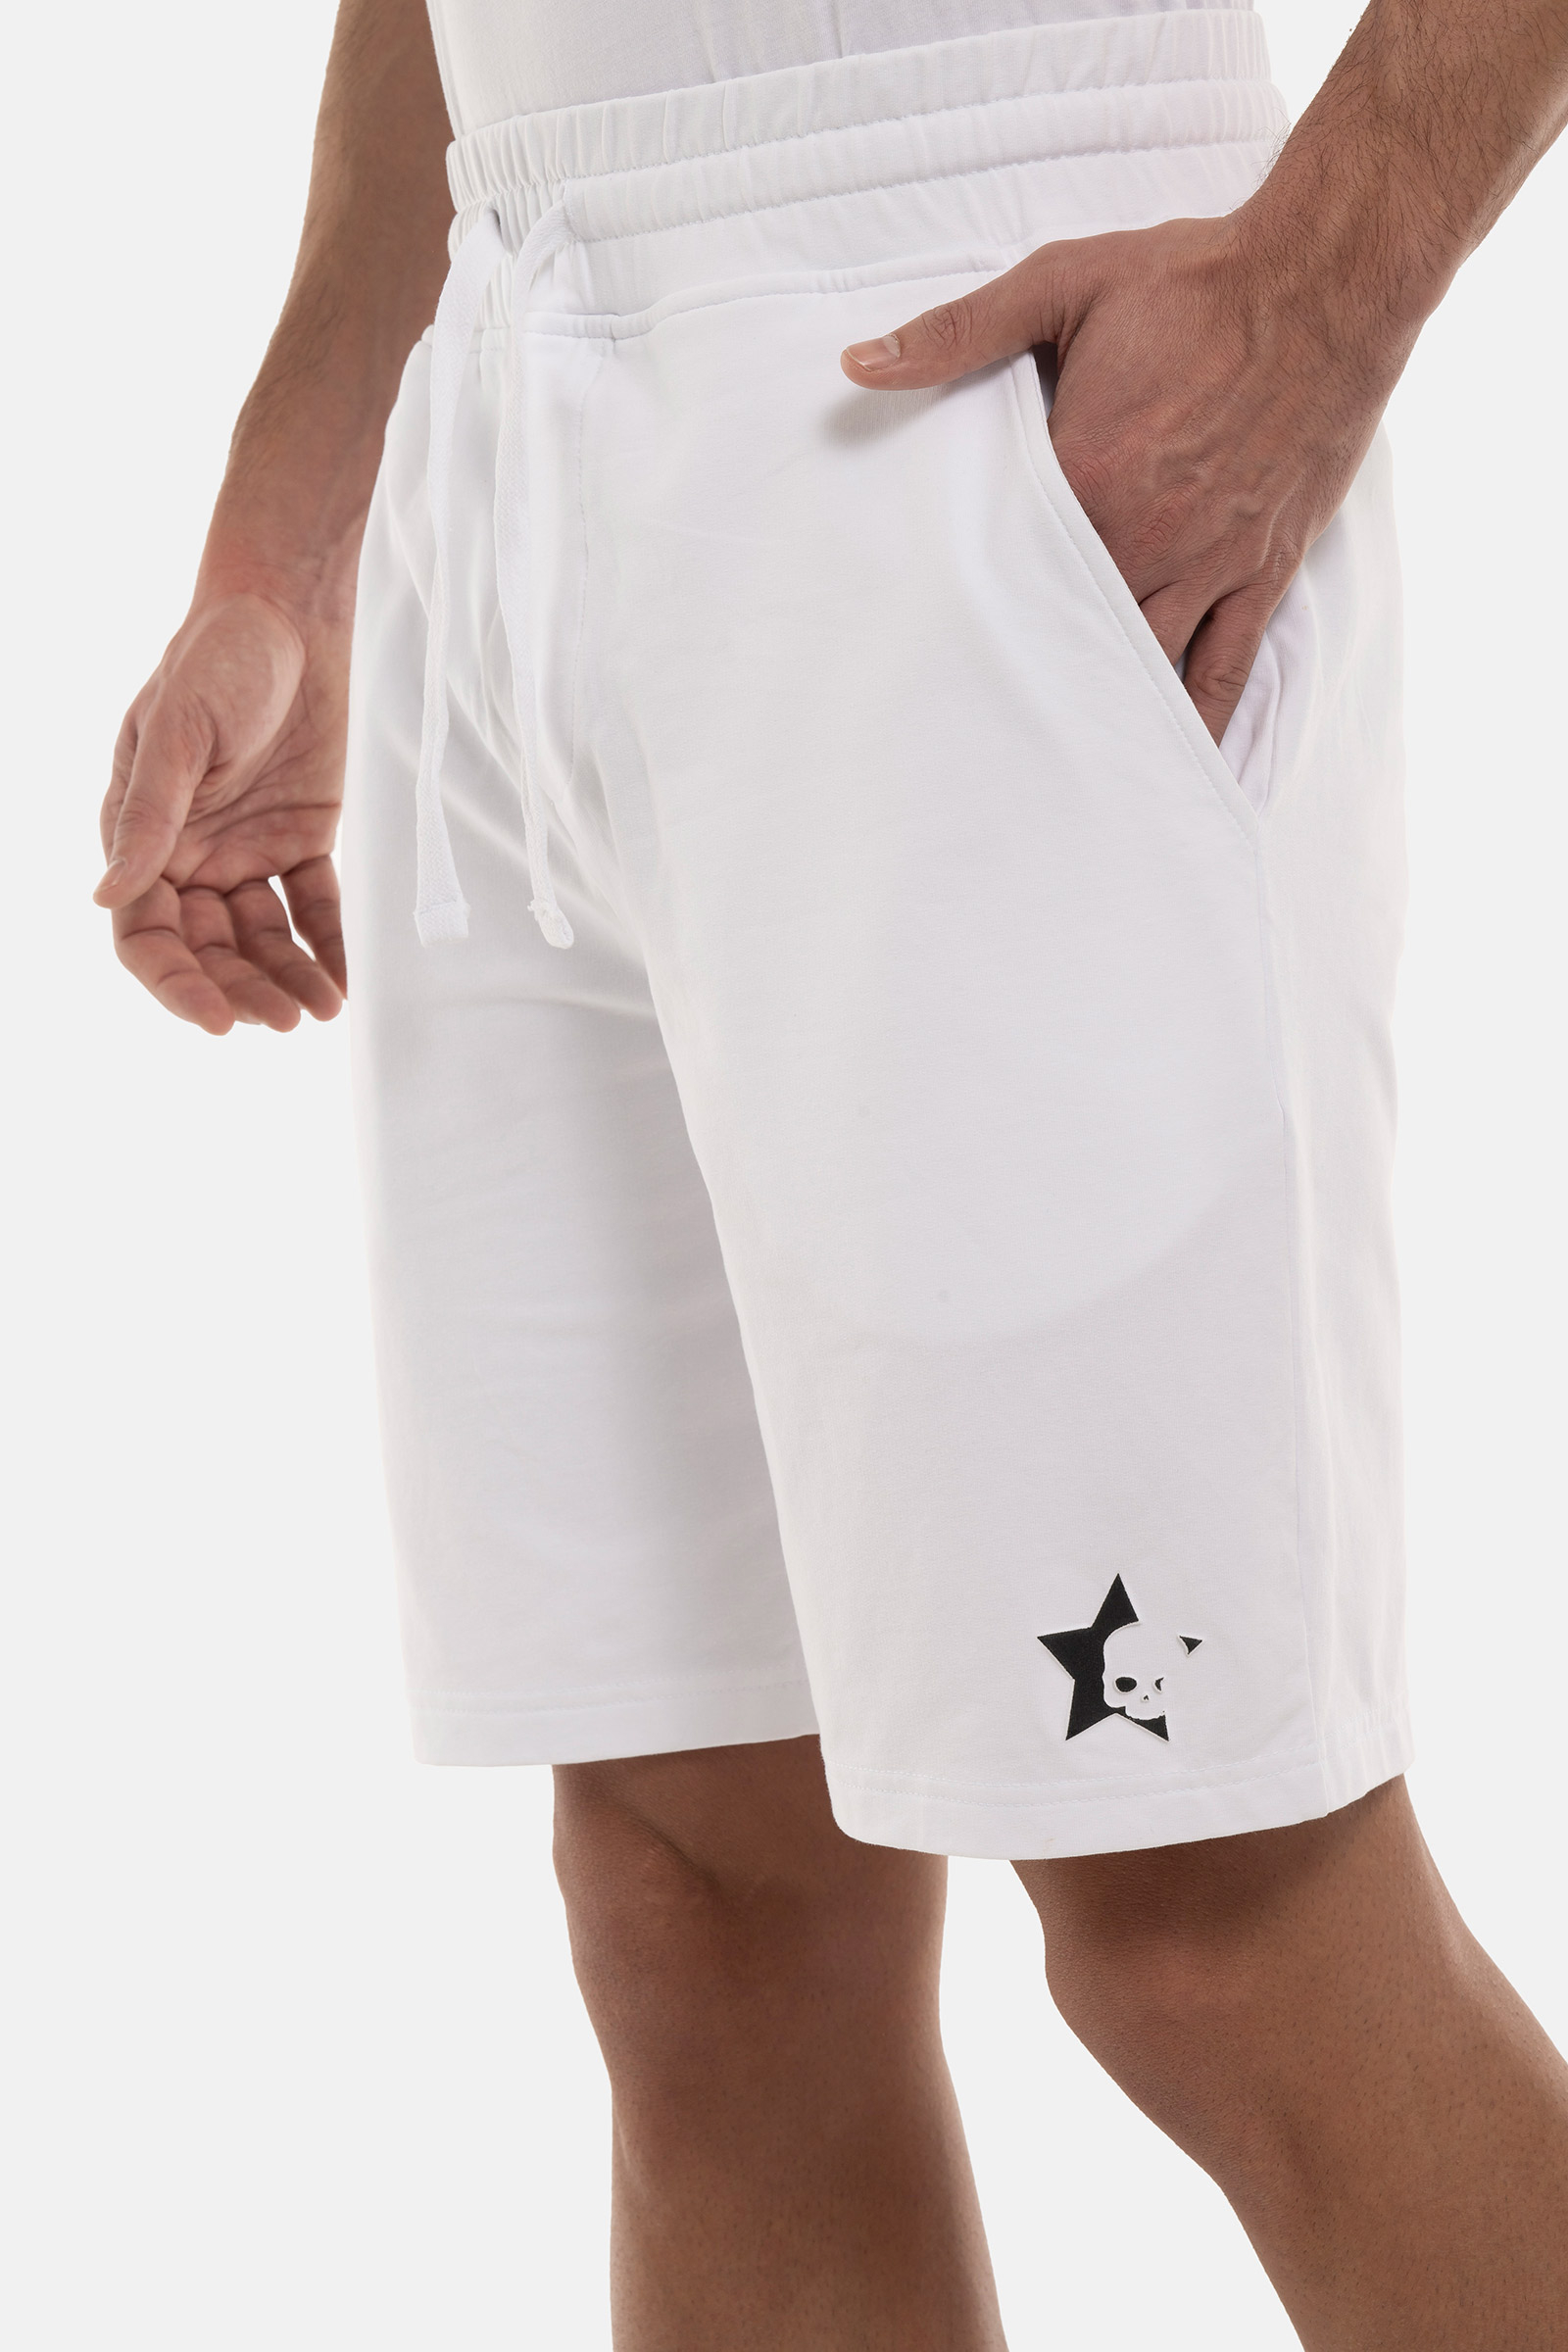 STARS SHORTS - WHITE - Hydrogen - Luxury Sportwear